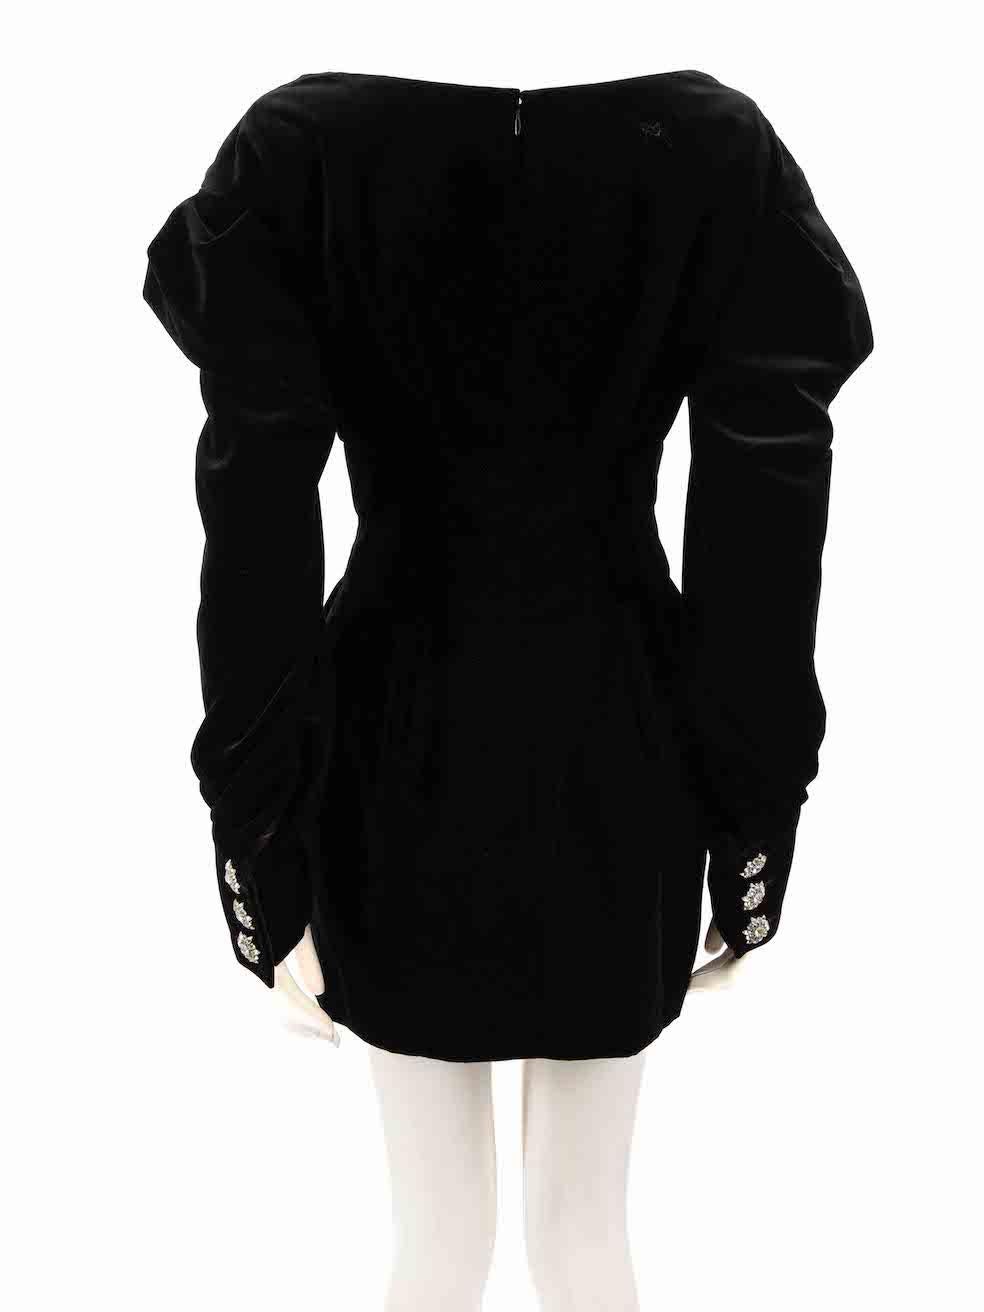 Alexandre Vauthier Black Velvet Long Sleeve Dress Size M In Good Condition For Sale In London, GB